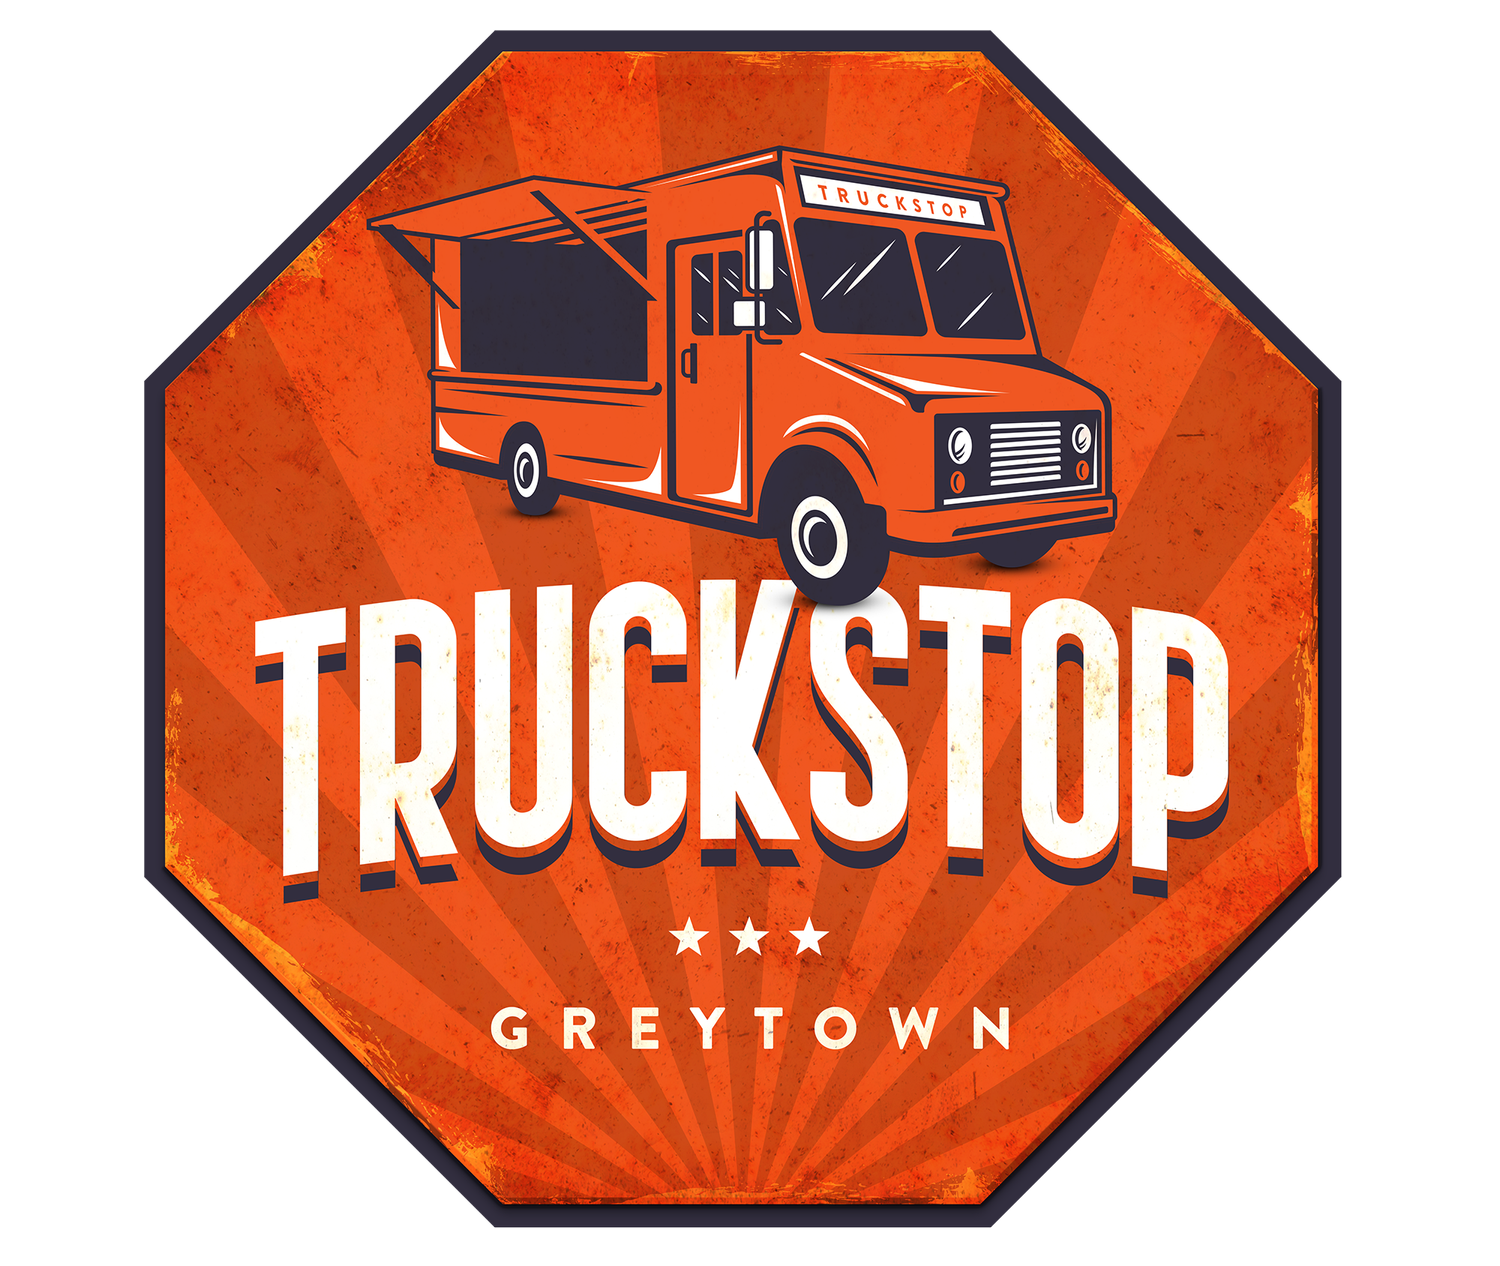  Truckstop Greytown